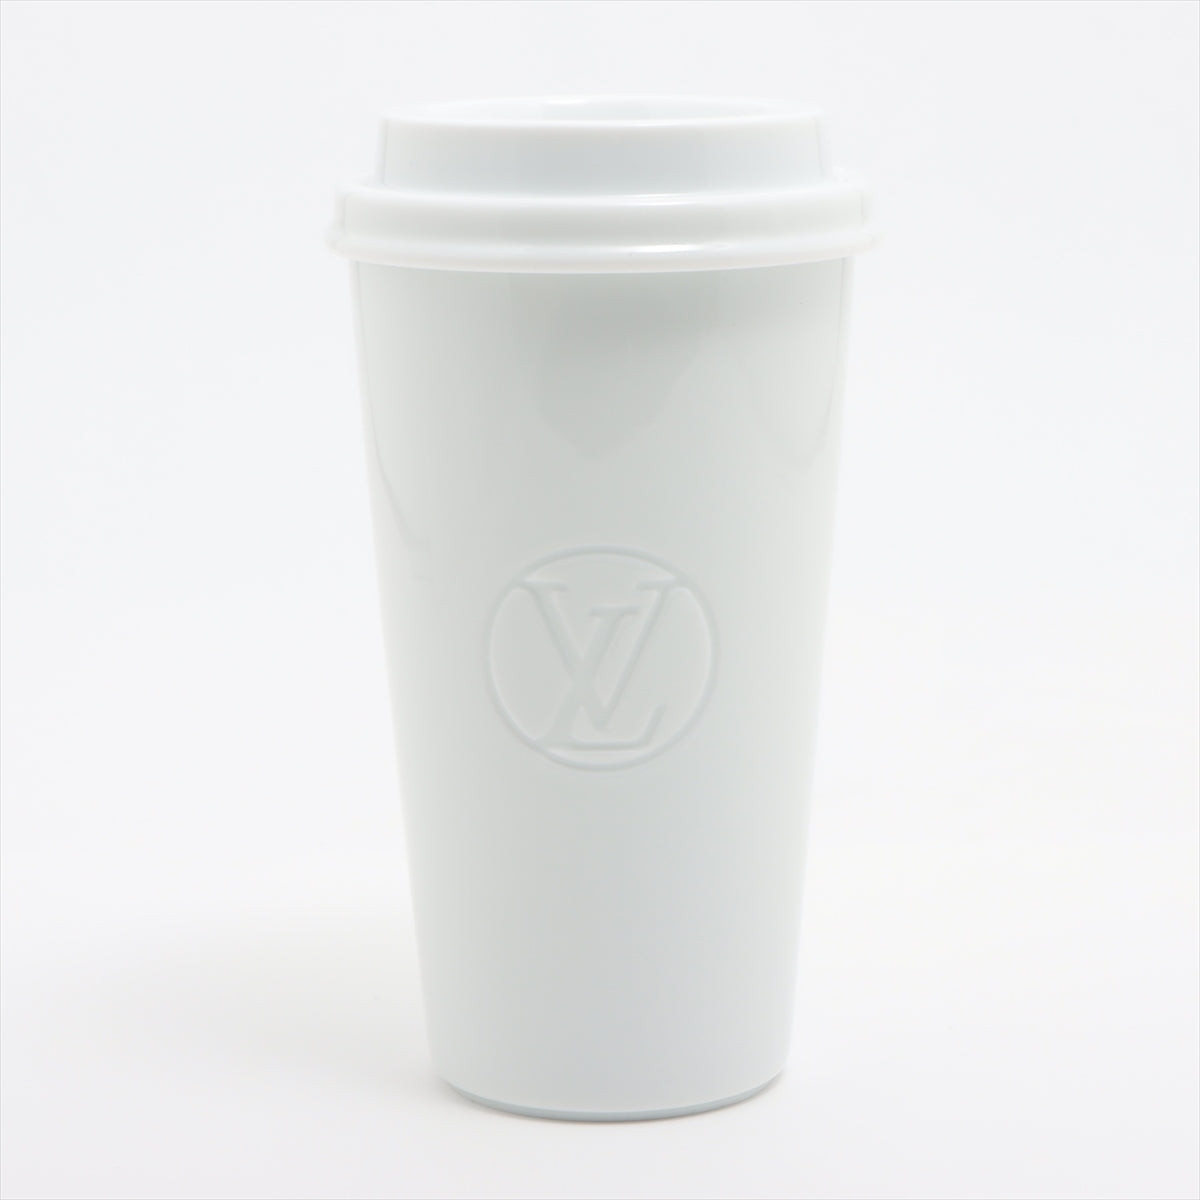 Louis Vuitton GI0653 cups Rui LG2241 cups Ceramic